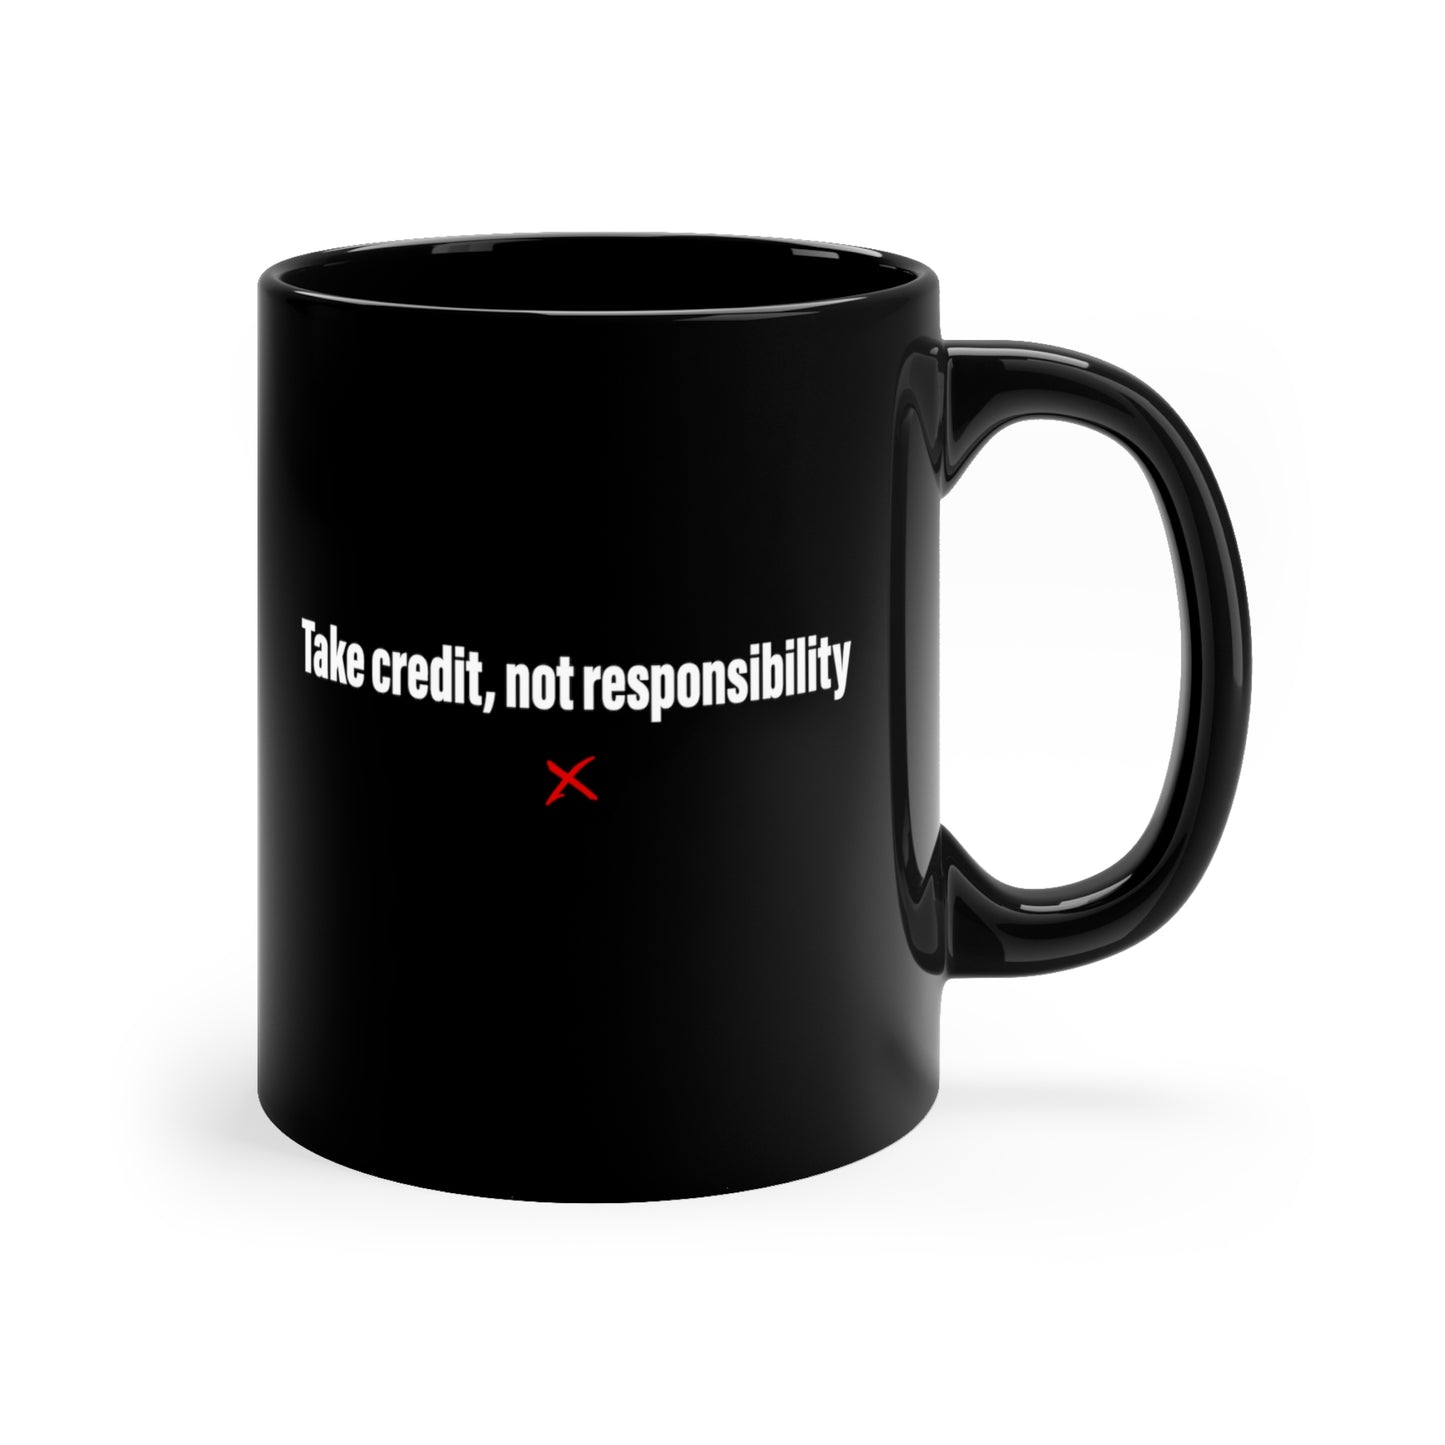 Take credit, not responsibility - Mug